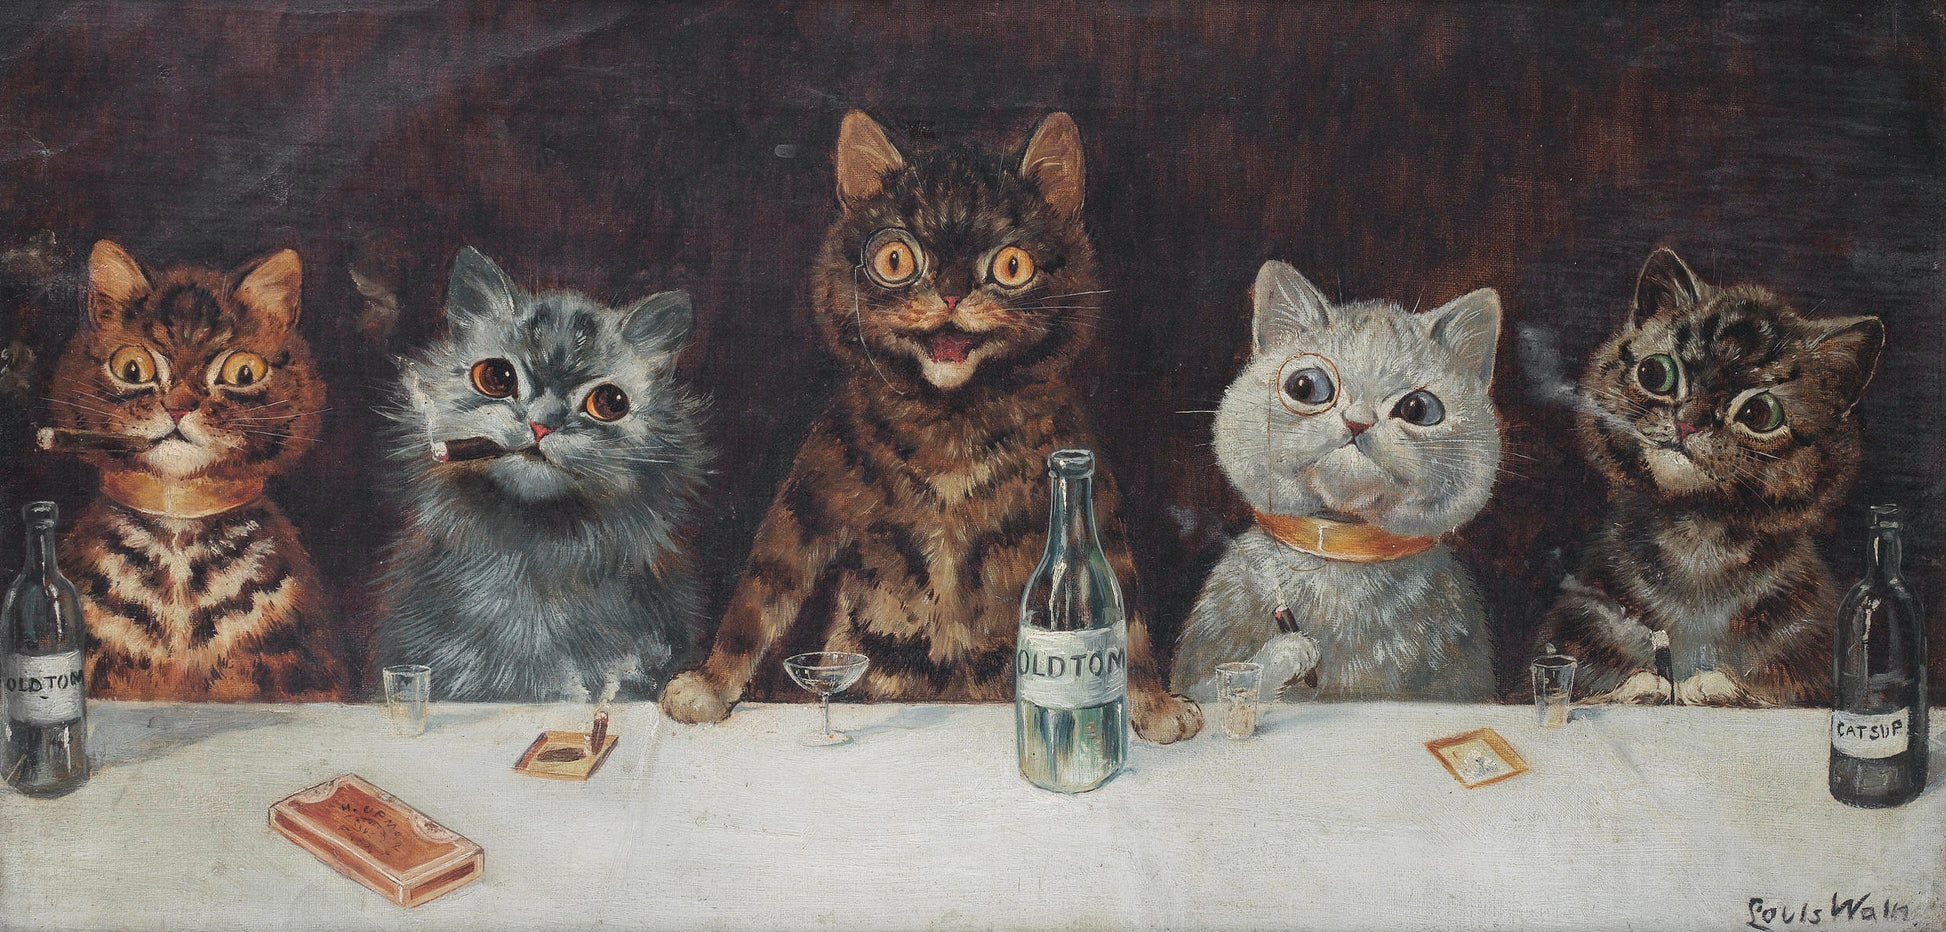 Louis Wain "The Bachelor Party" cats artwork (1890s) Posters, Prints, & Visual Artwork The Trumpet Shop   